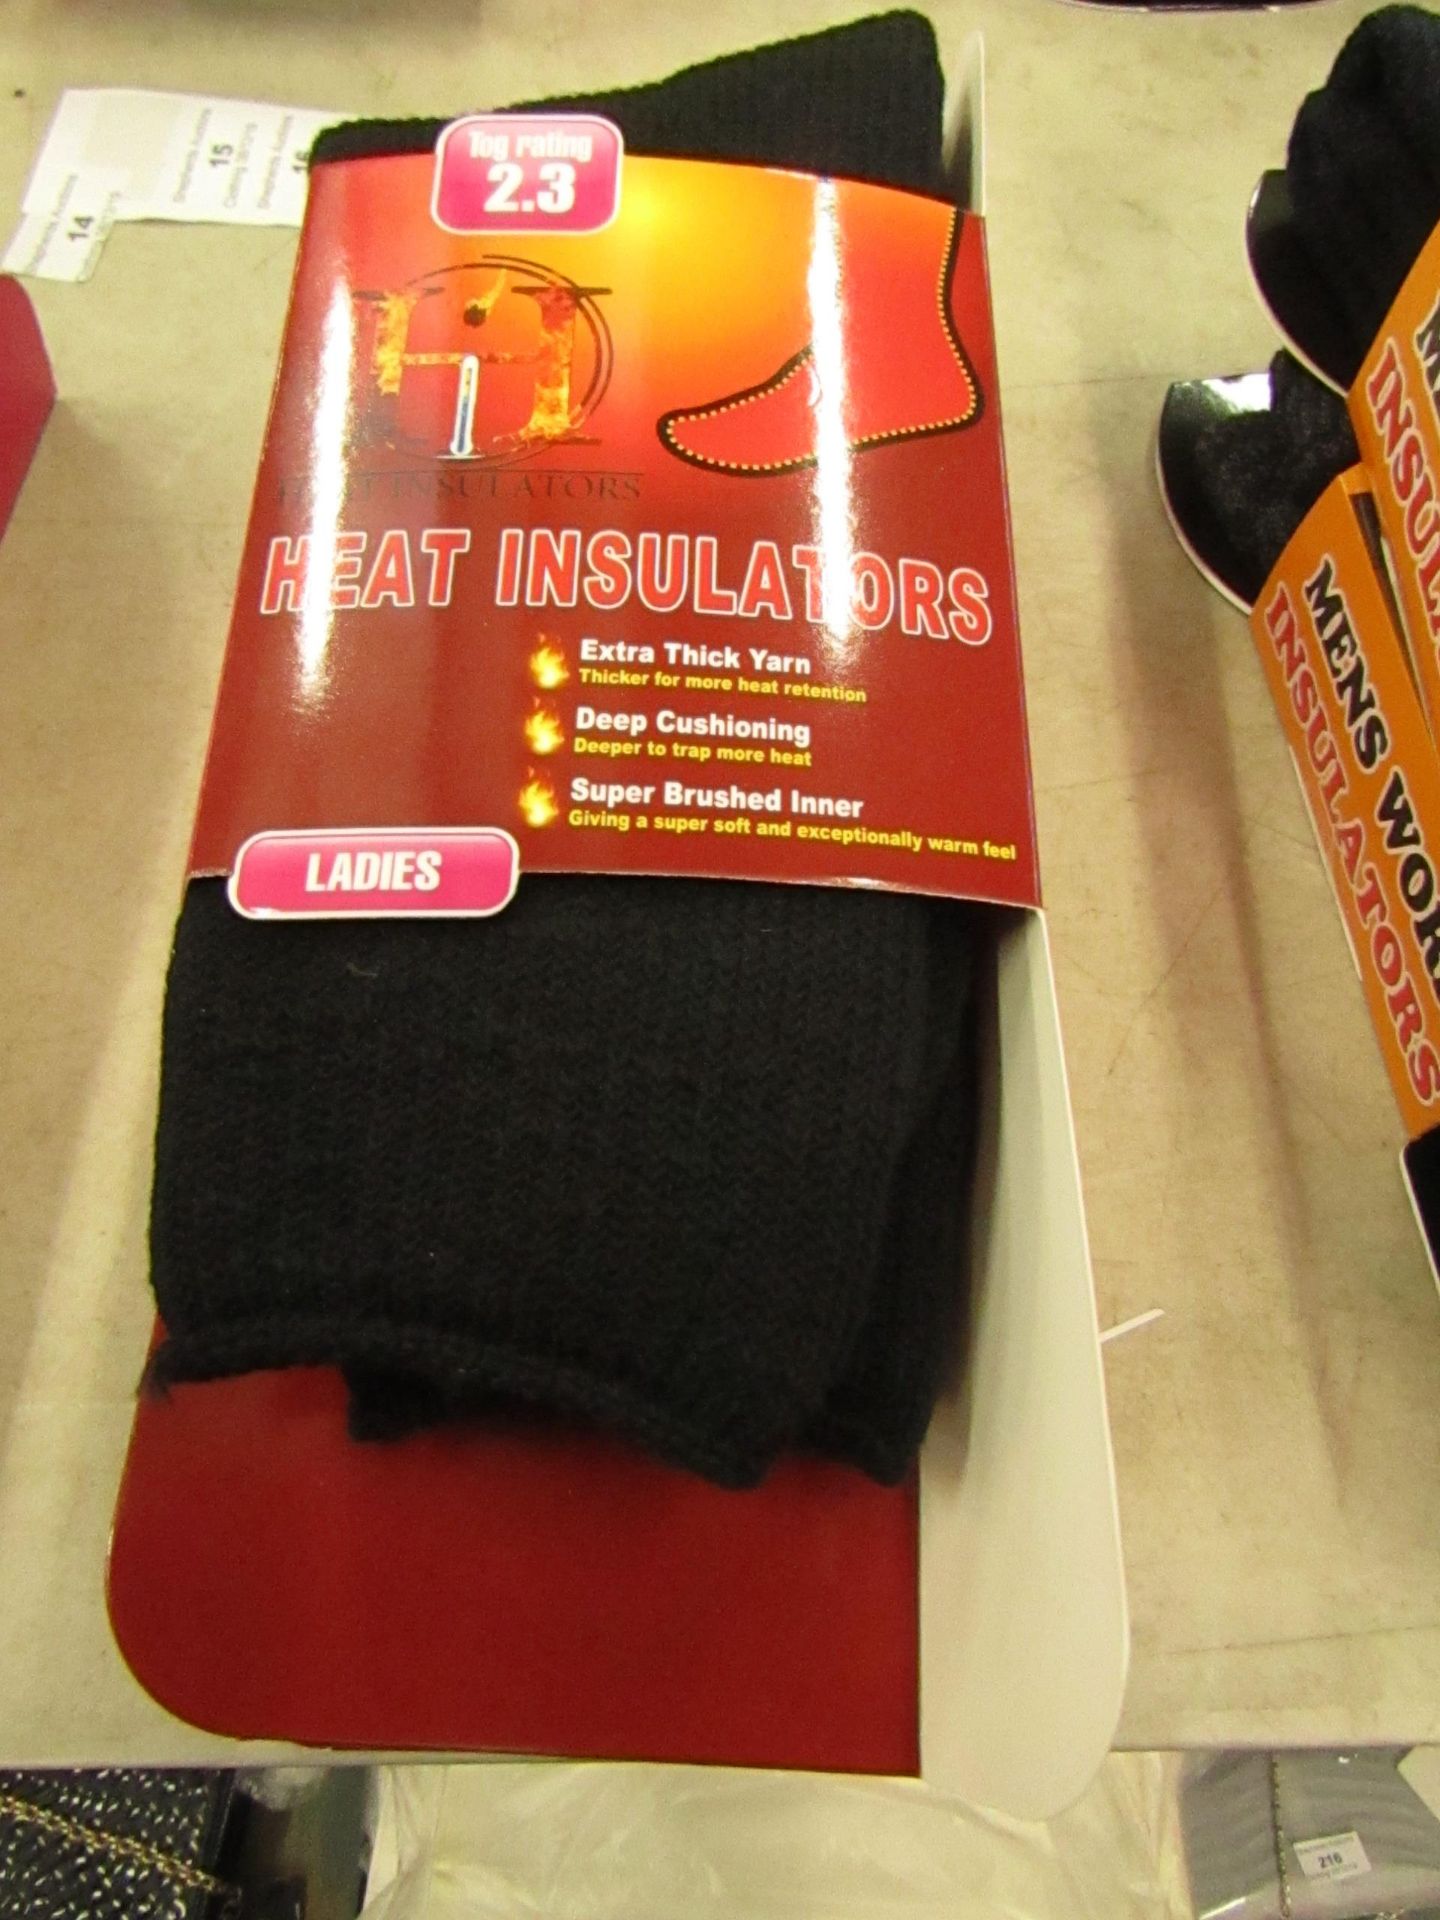 2 x pairs of Women's Heat Insulators 2.3 tog rating Durable & Hardwearing with Super Brushed Inner